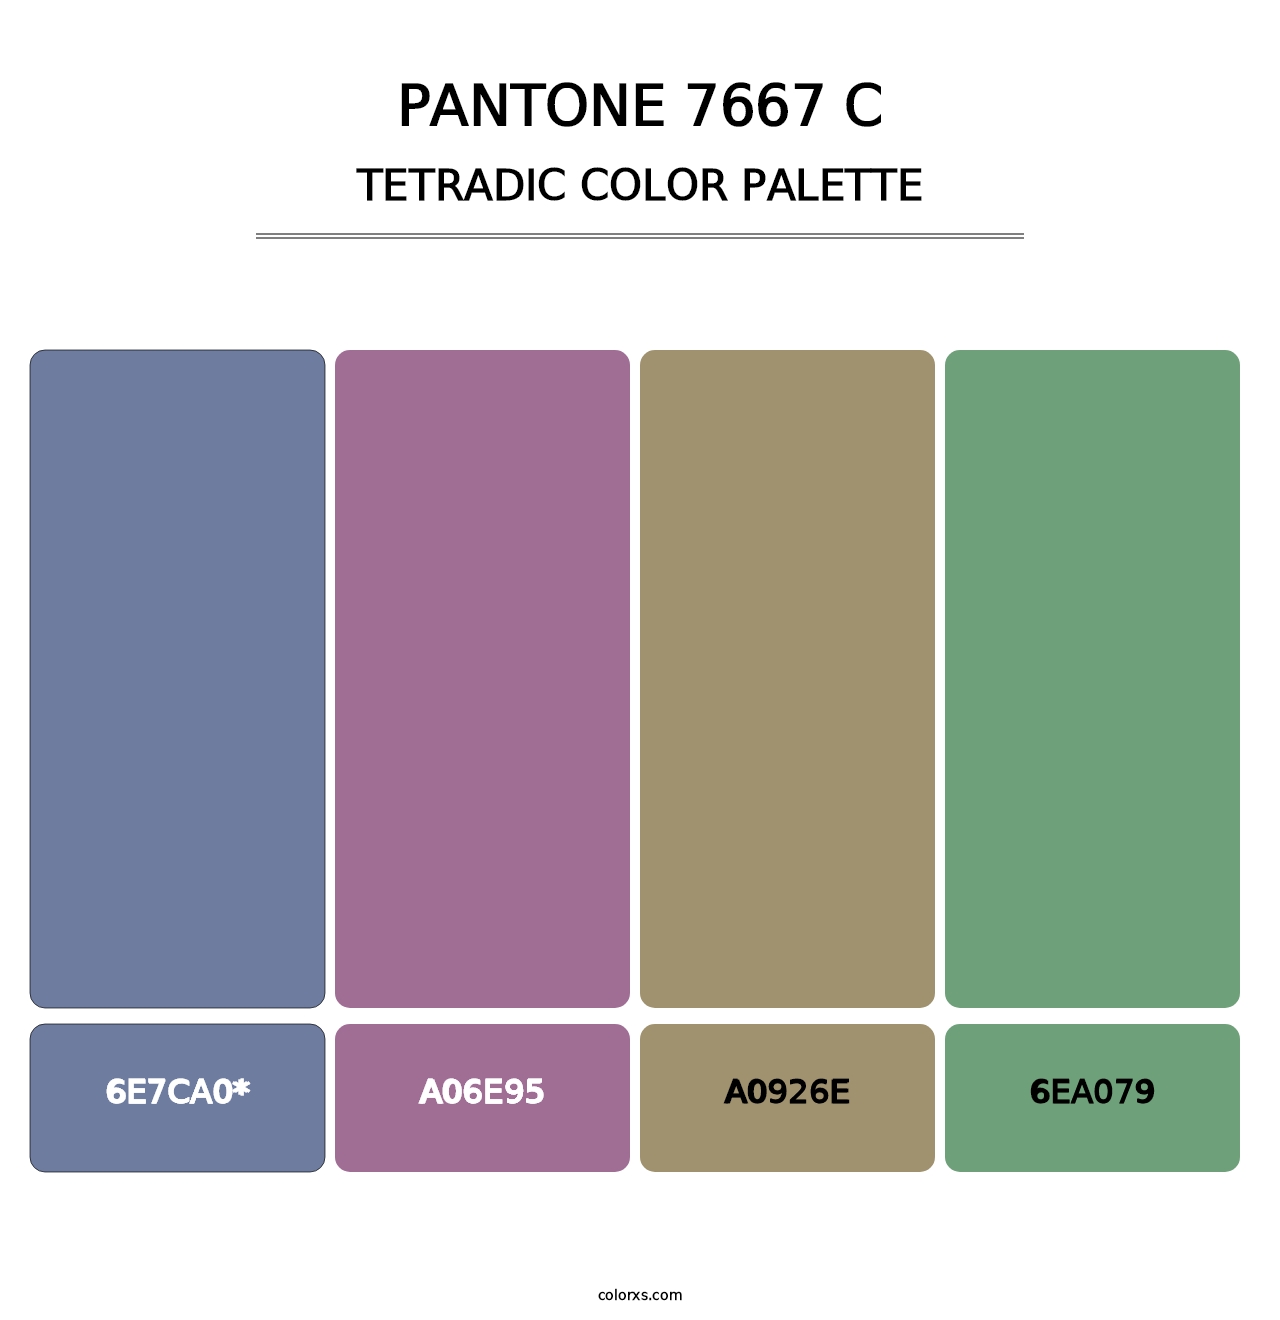 PANTONE 7667 C - Tetradic Color Palette